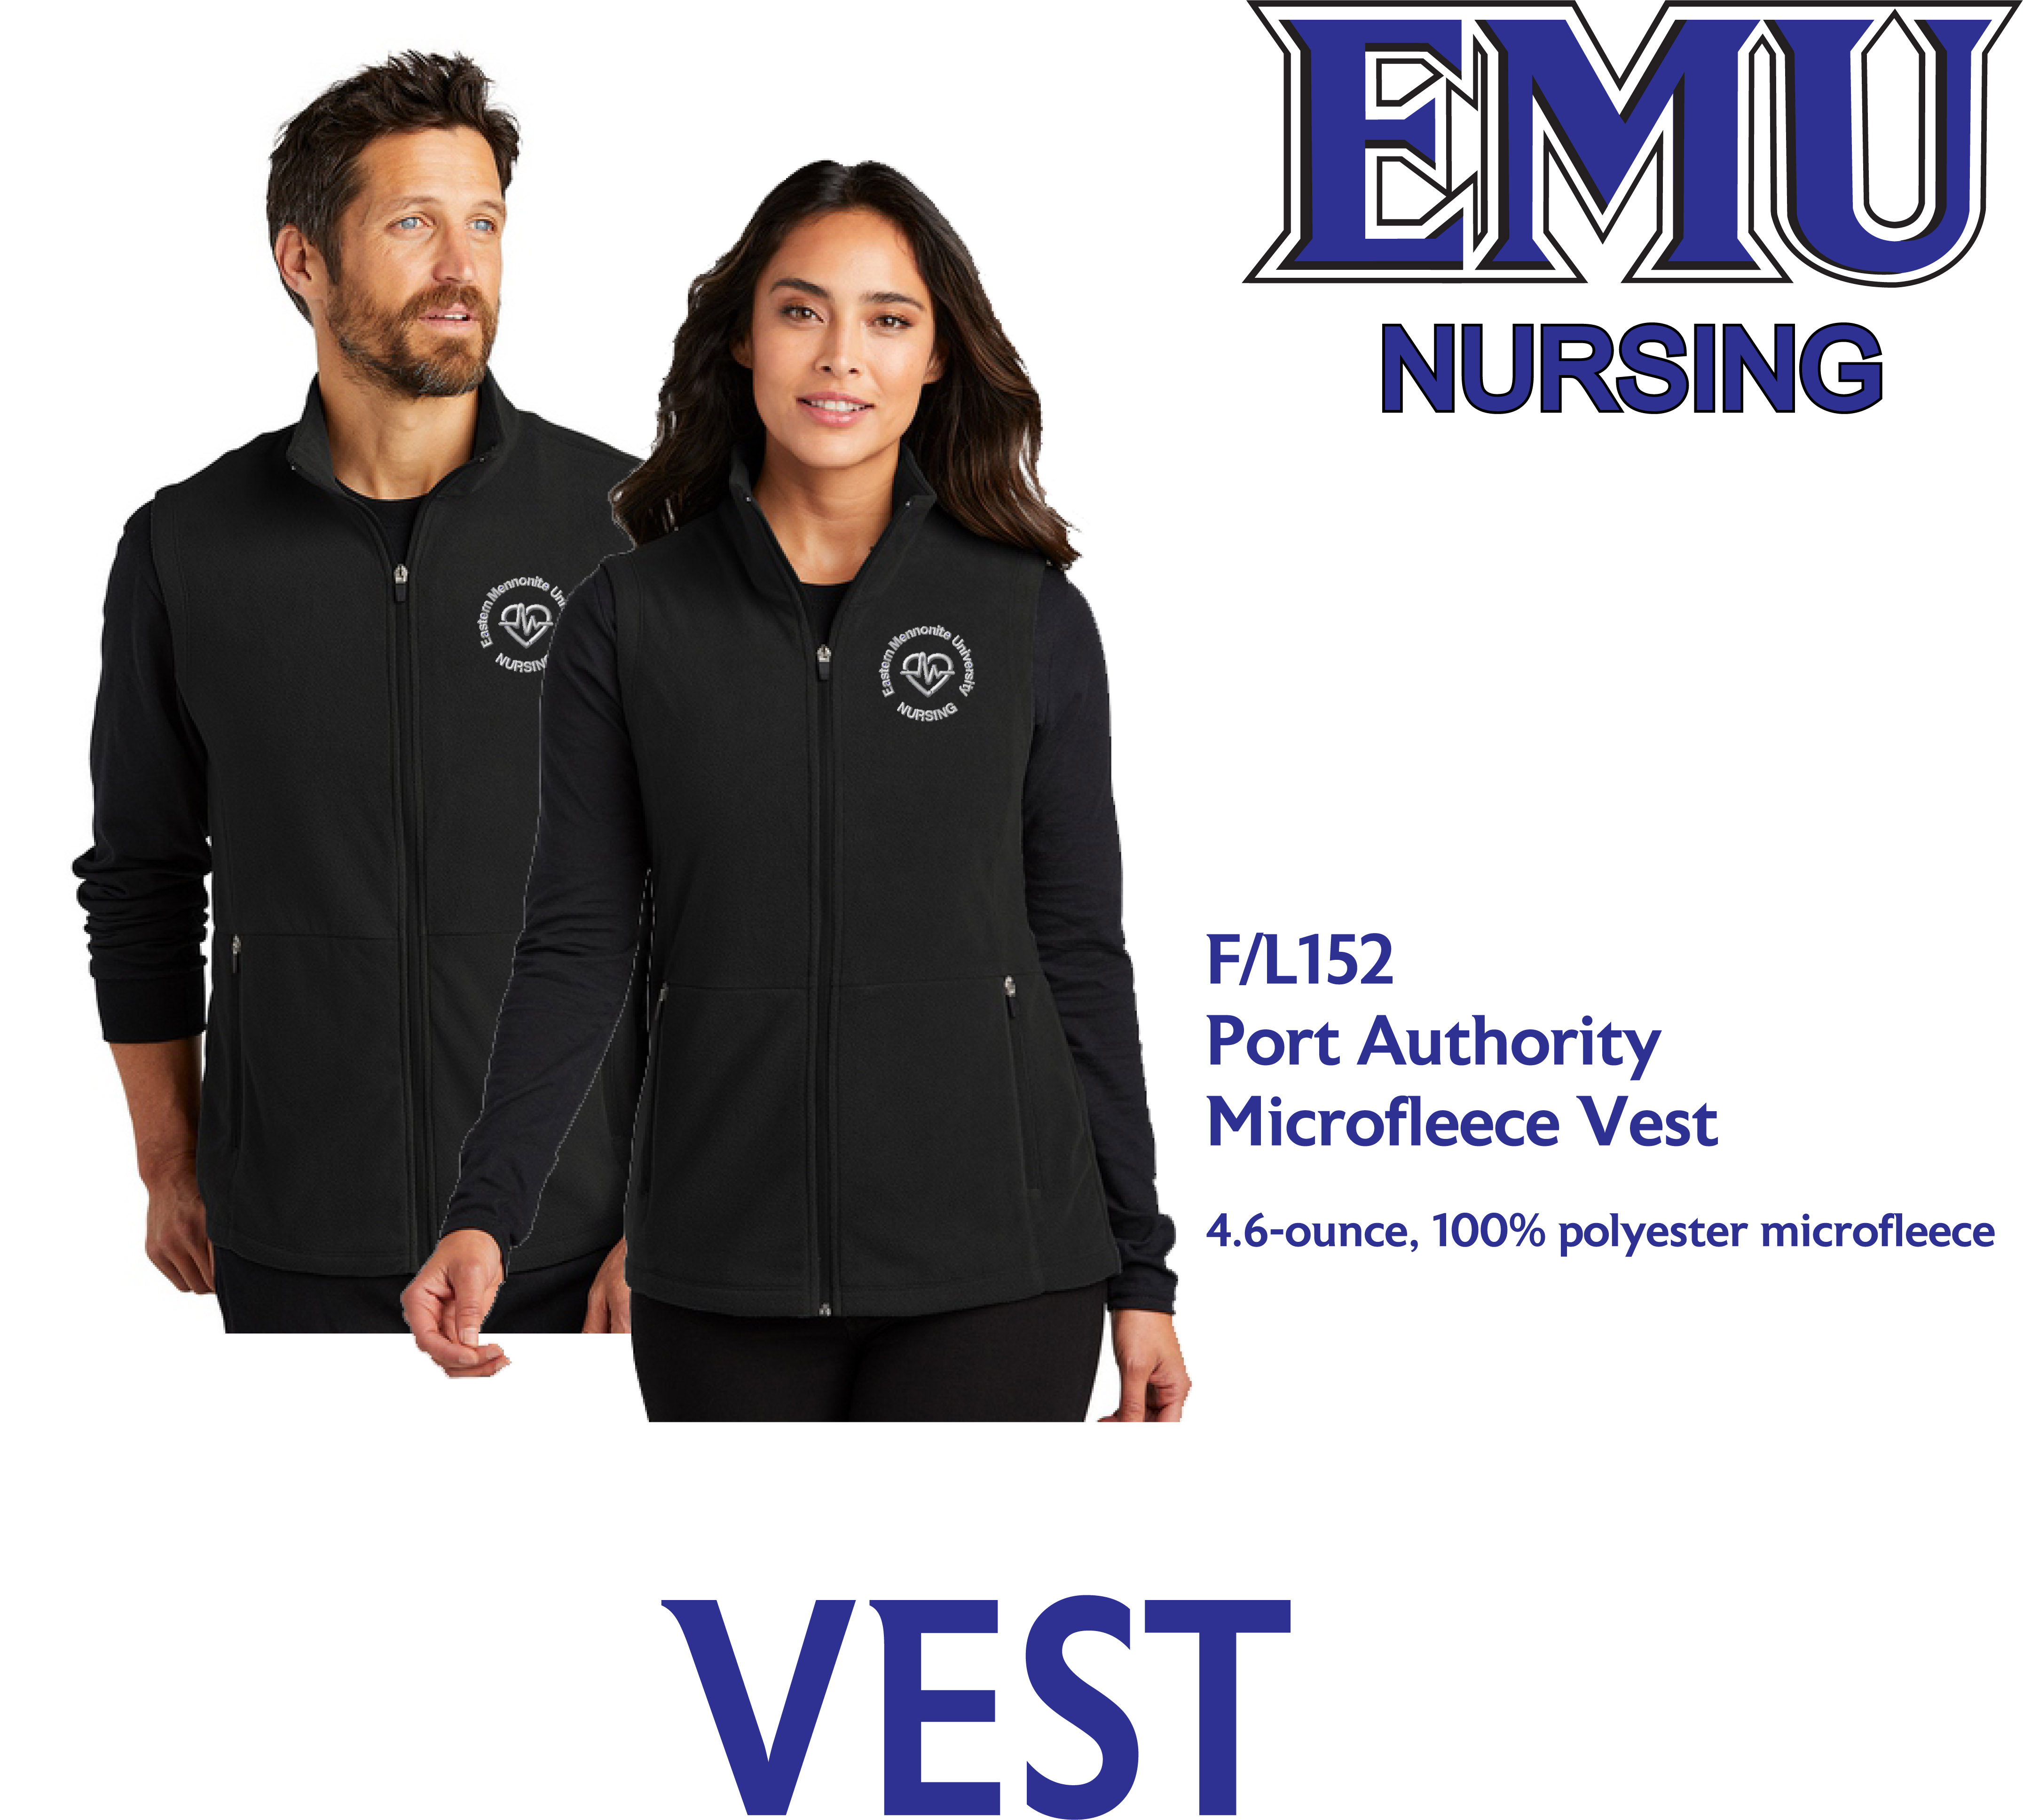 EMU Nursing Vest